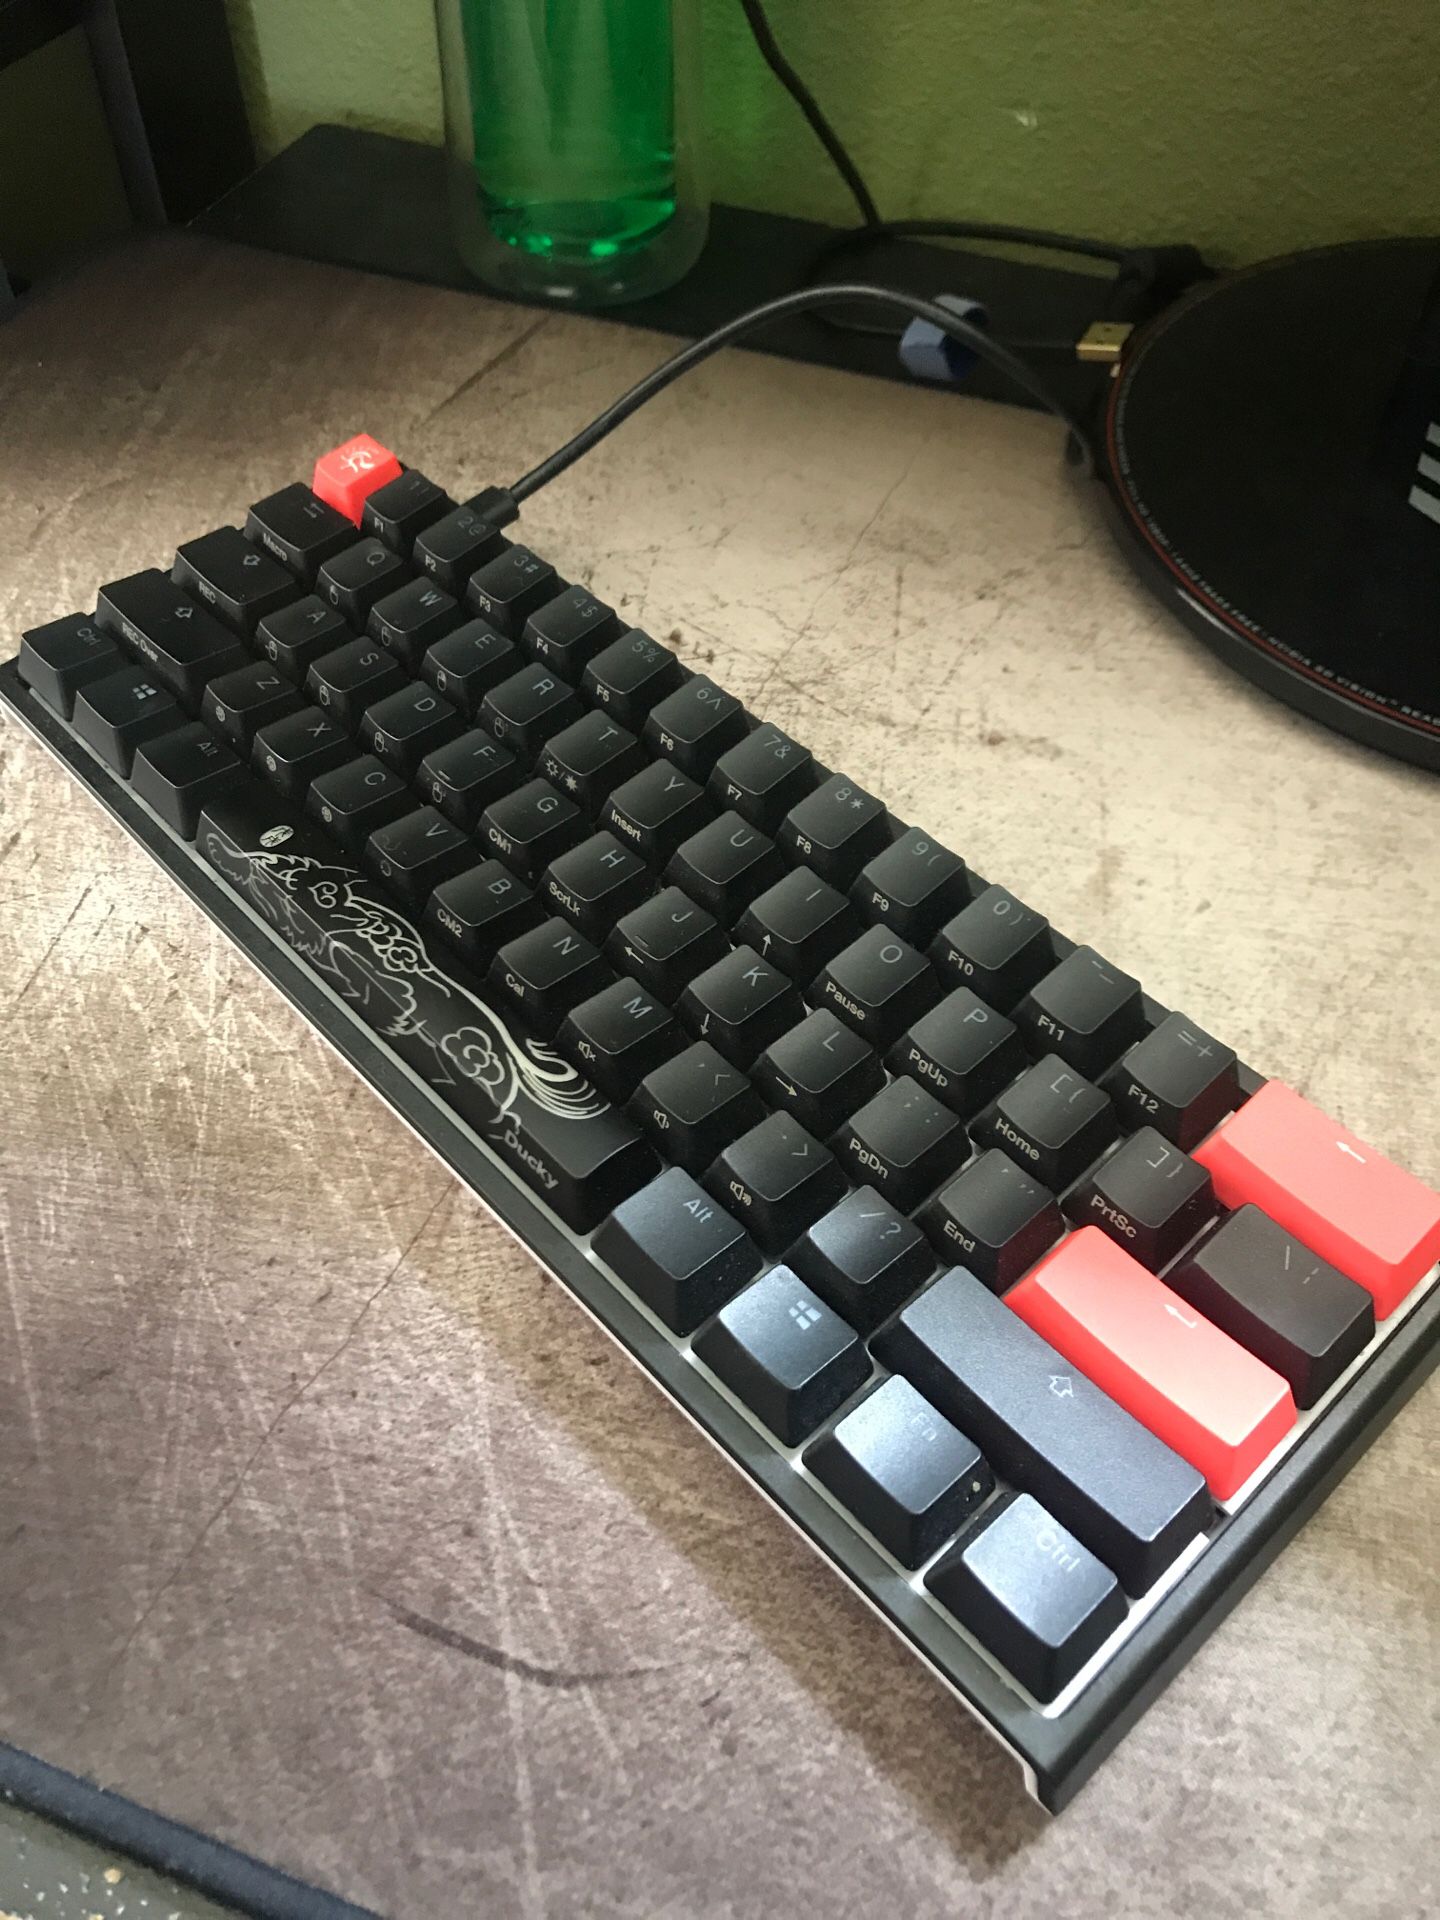 Ducky One 2 mini 60% keyboard